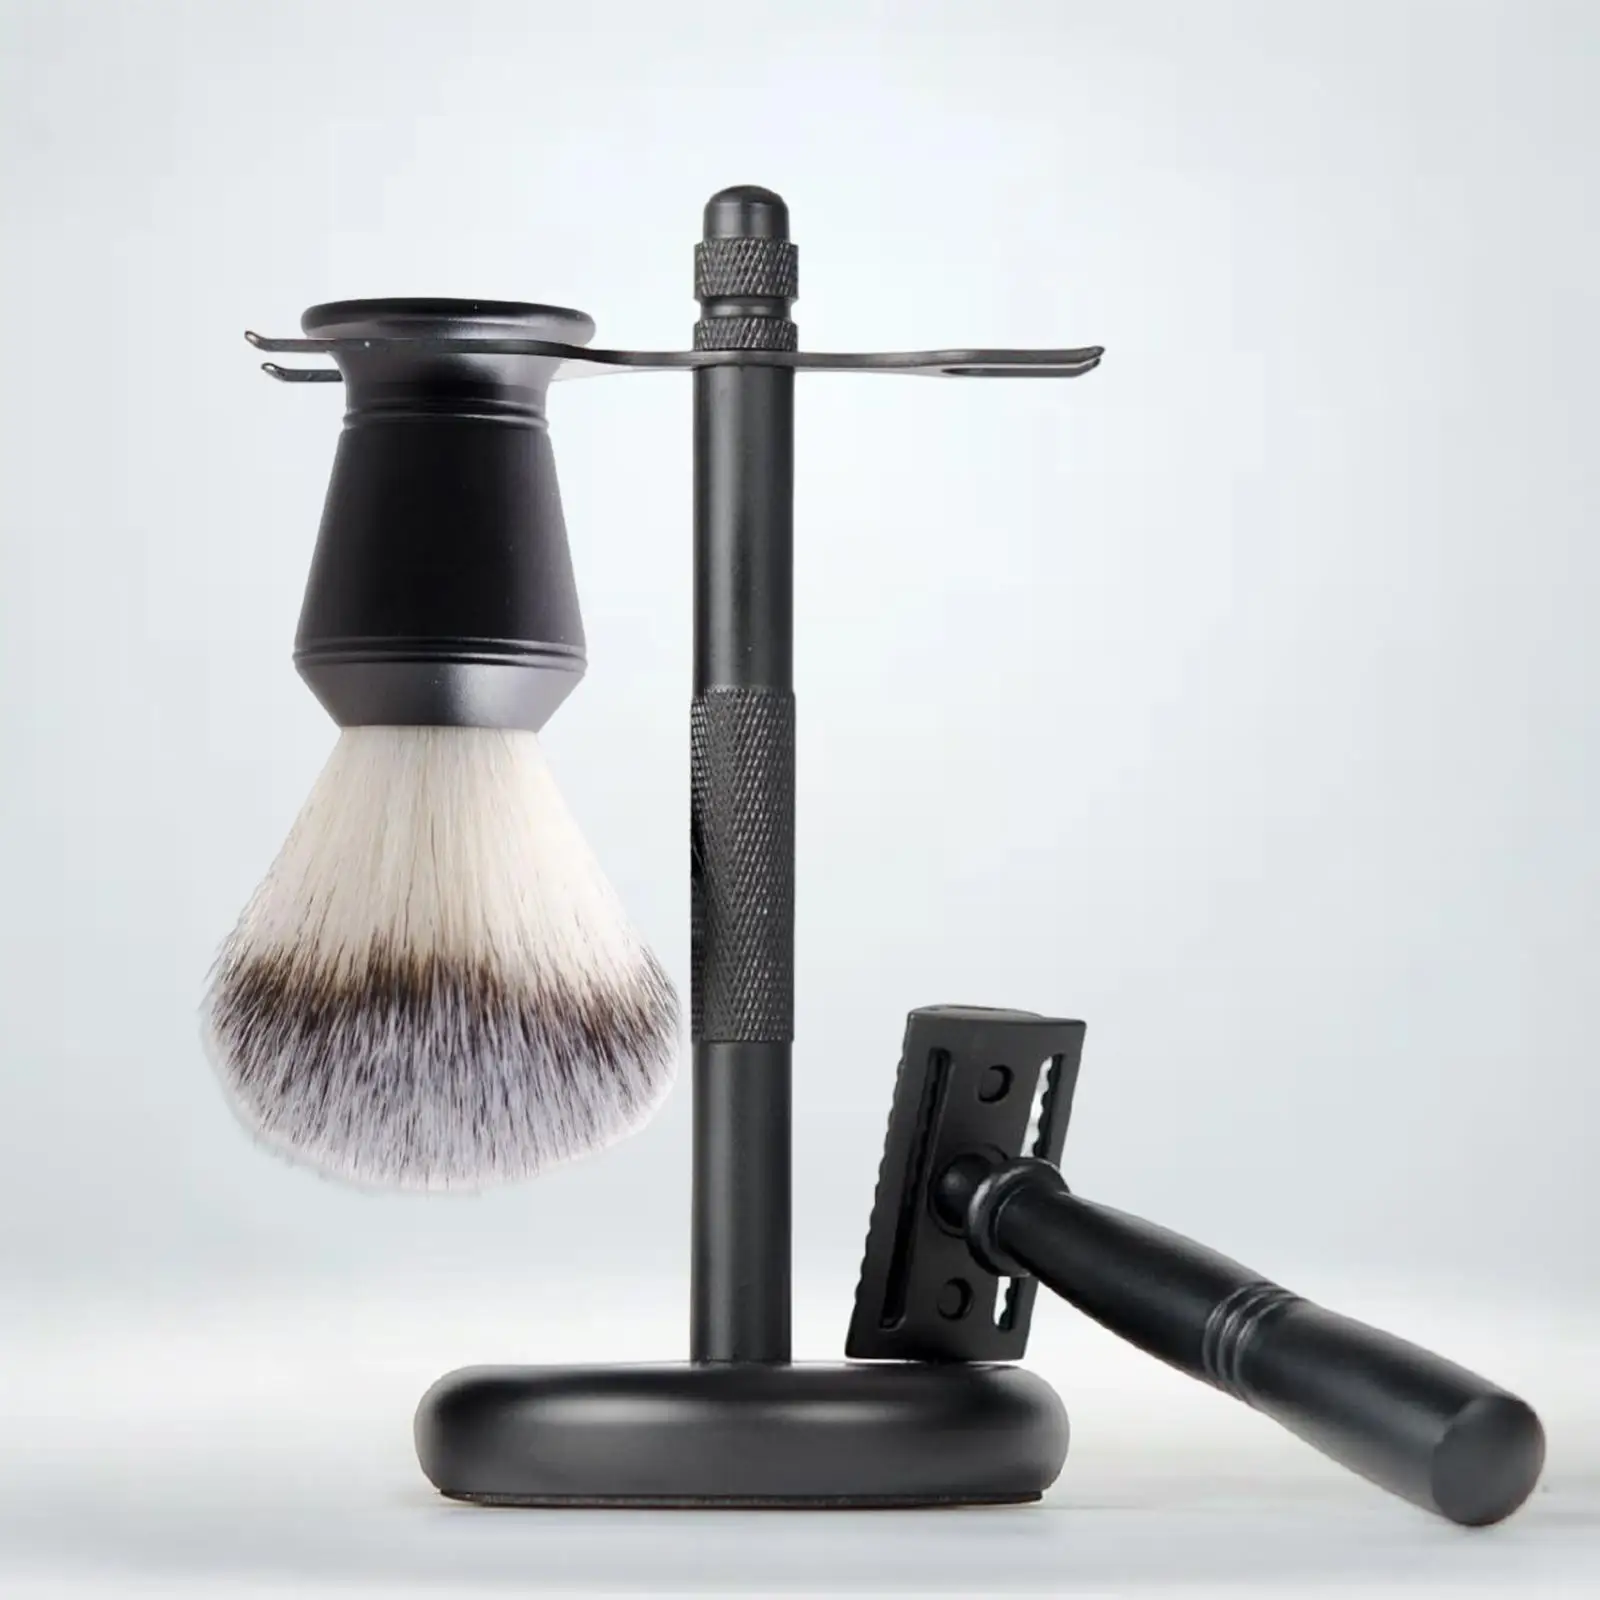 3x Mens Shaving Set Black Razor Shaving Kit Includes Edge Razor, Holder, Shaving Brush Luxury for Men Dad Boyfriend Husband